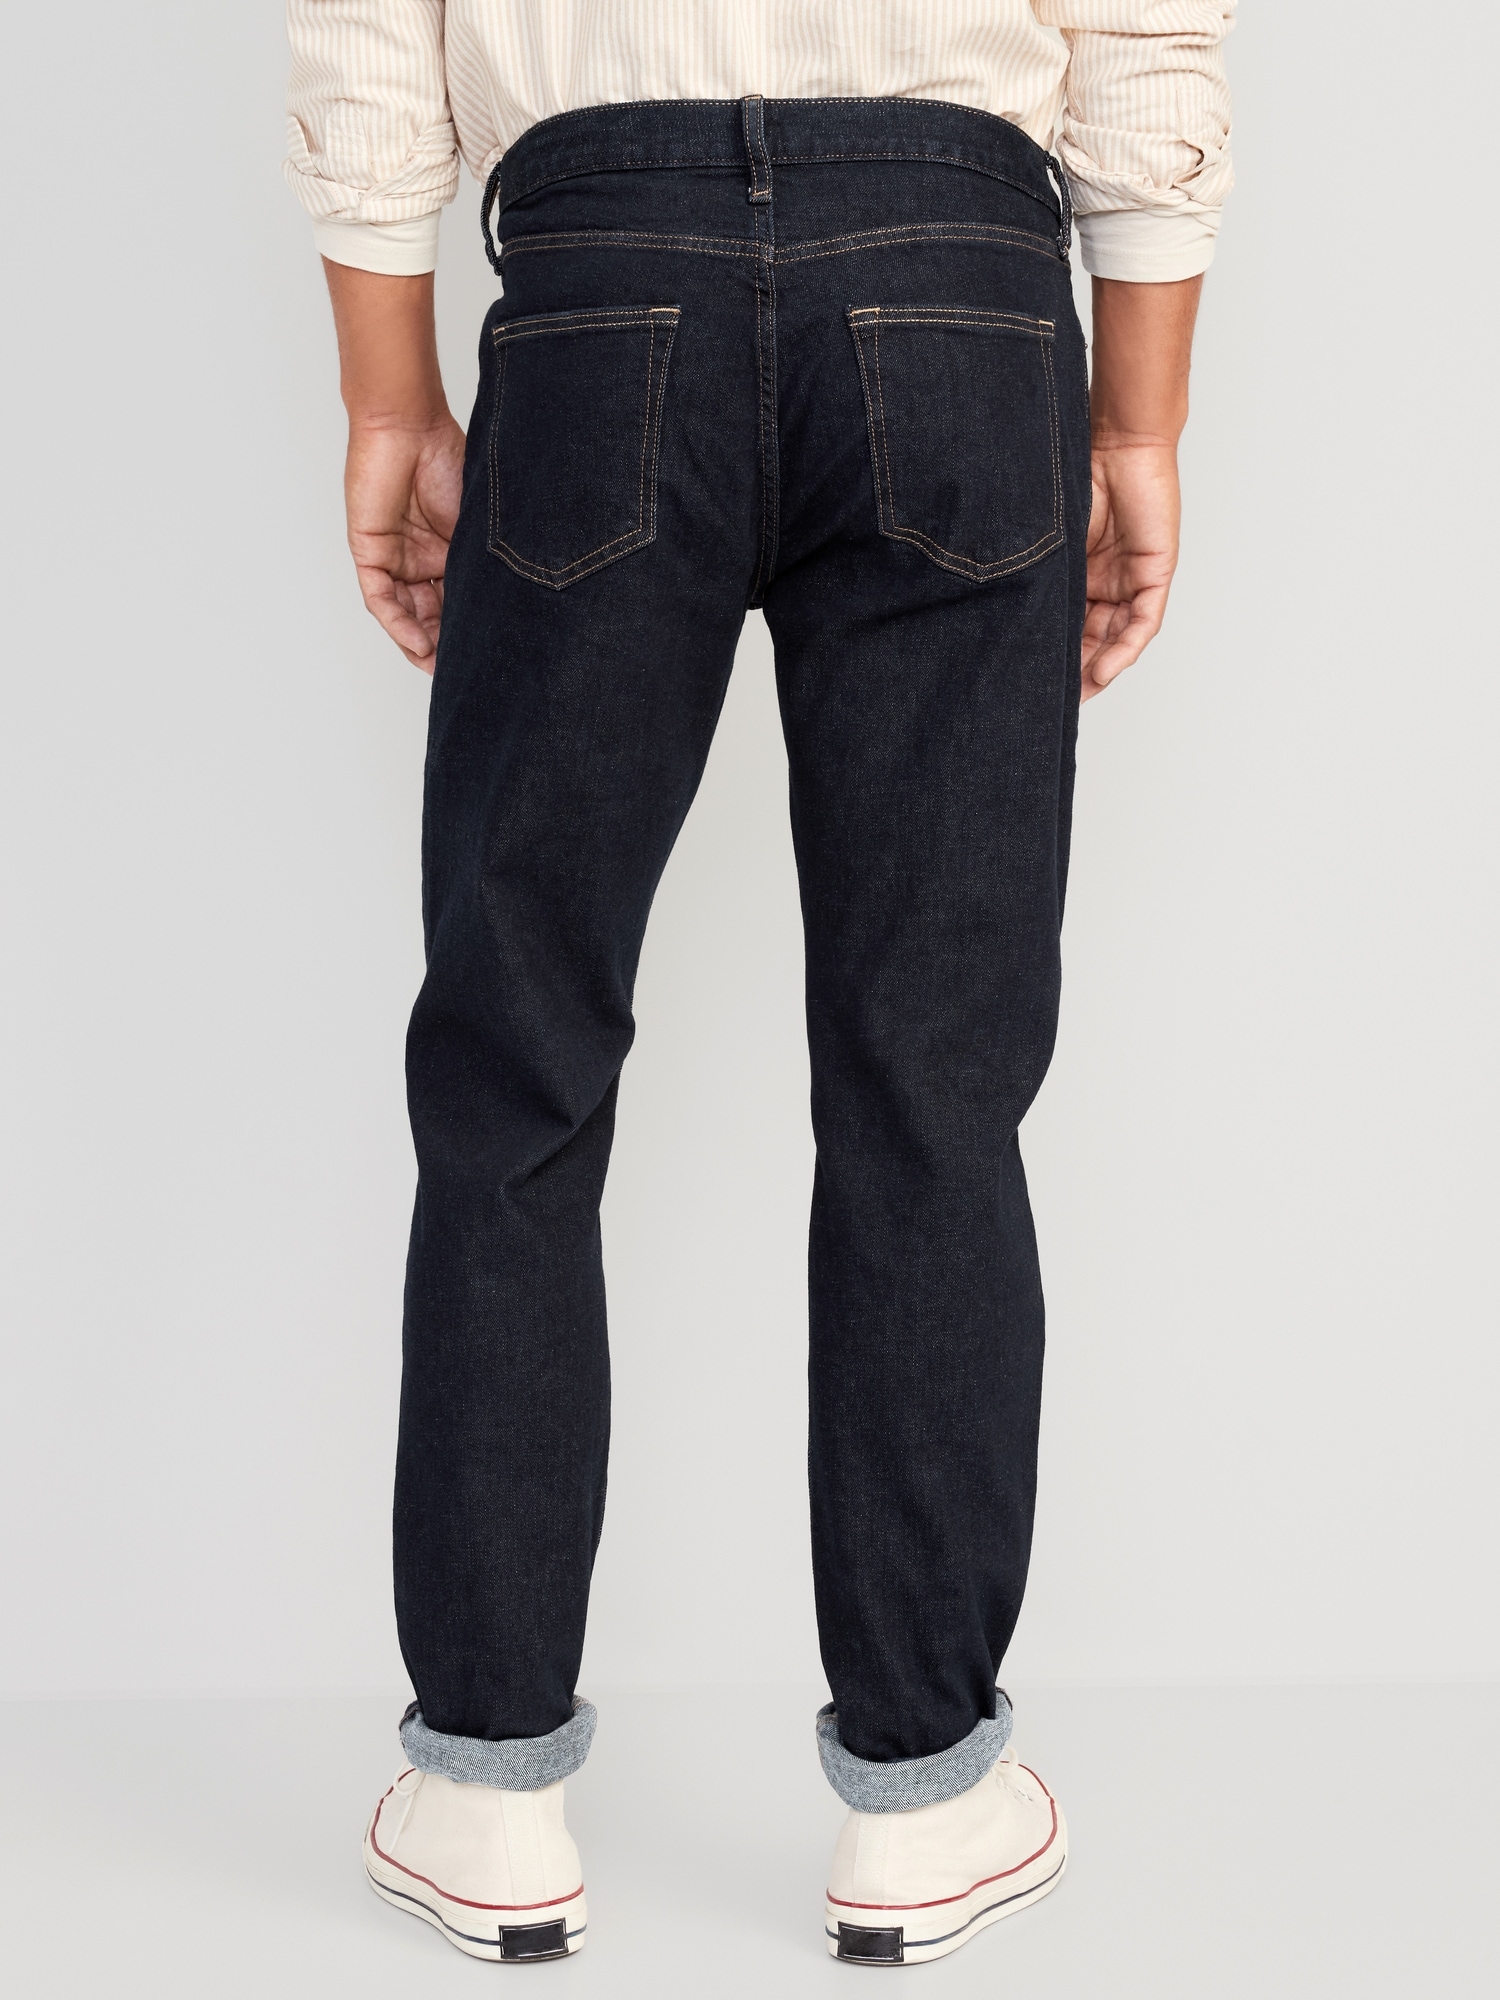 Relaxed Slim Taper Built-In Flex Dark-Wash Jeans | Old Navy